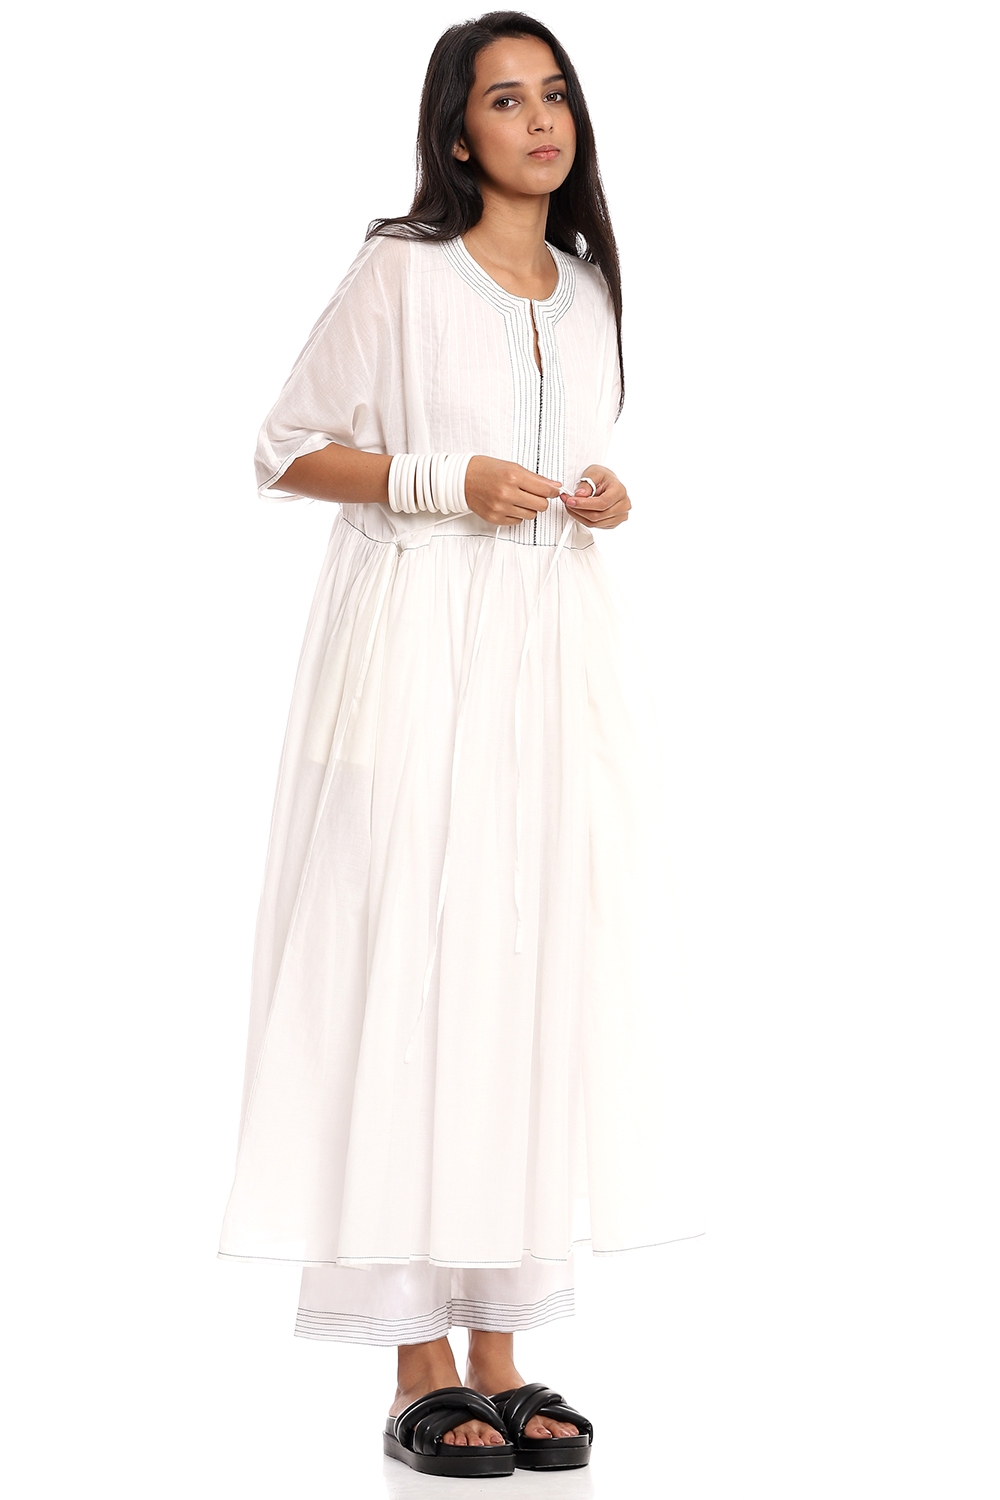 ABRAHAM AND THAKORE | Ivory Flared Dress Coordinate Set